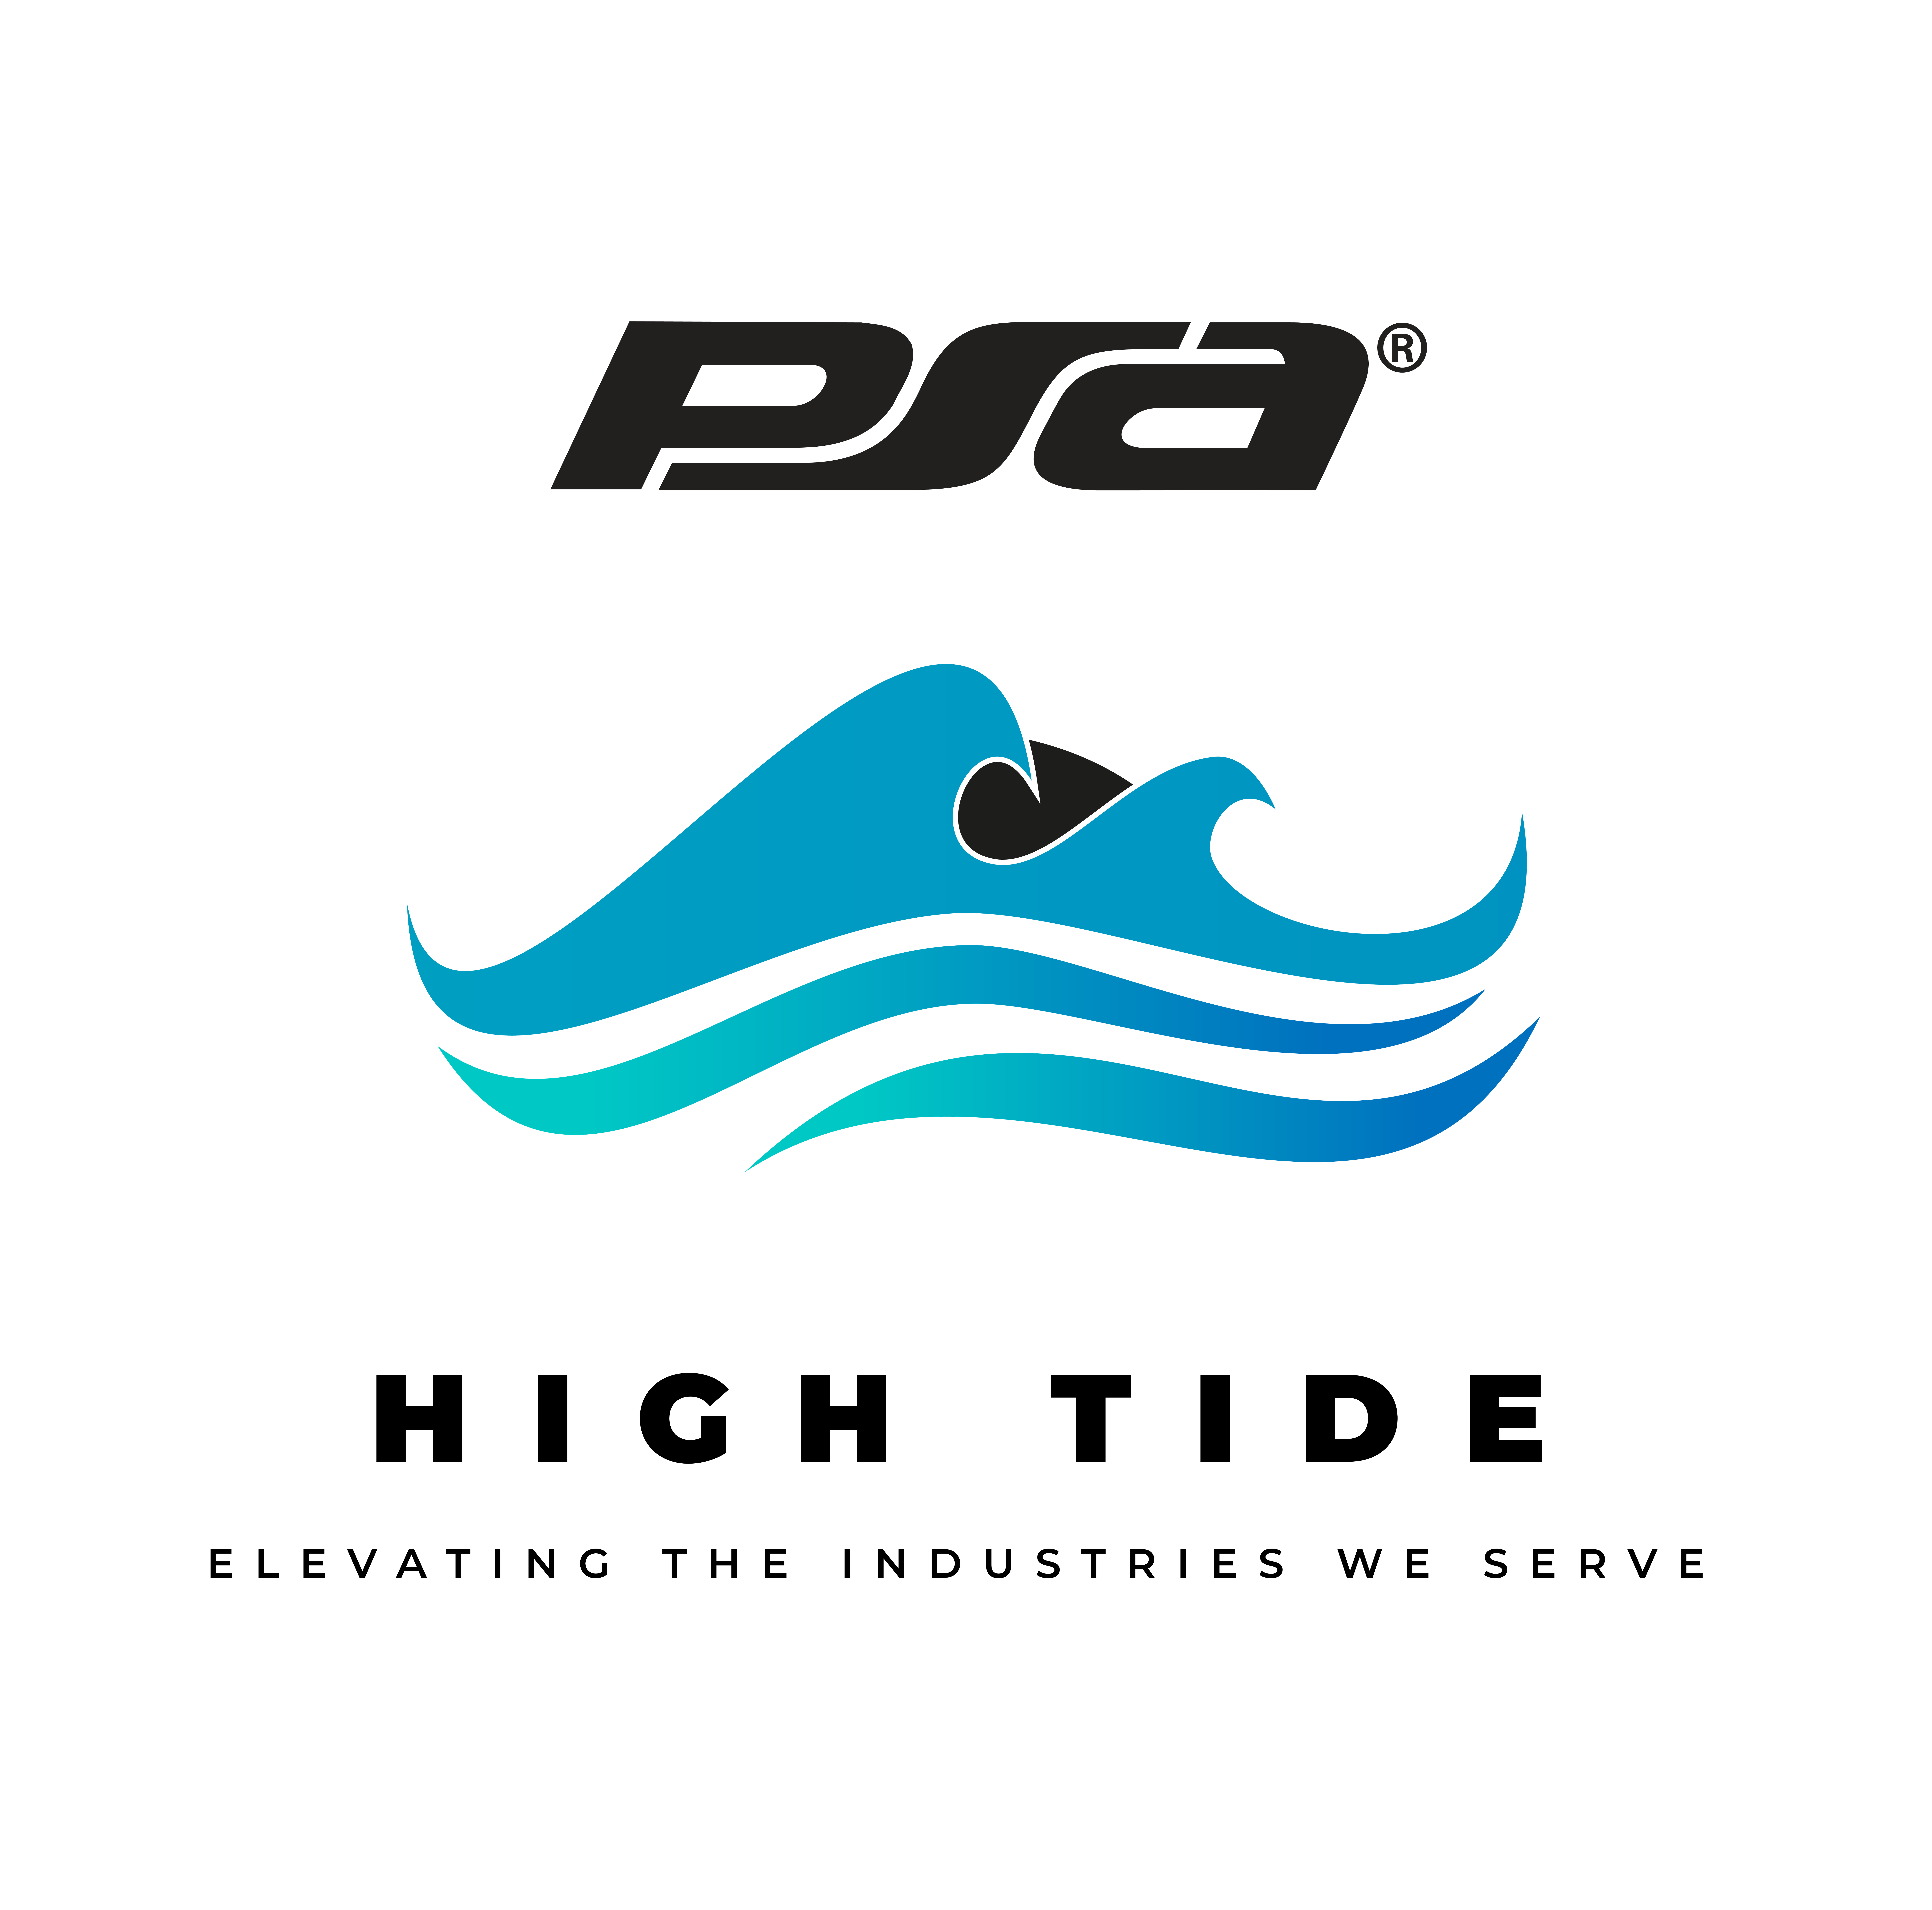 PSA High Tide